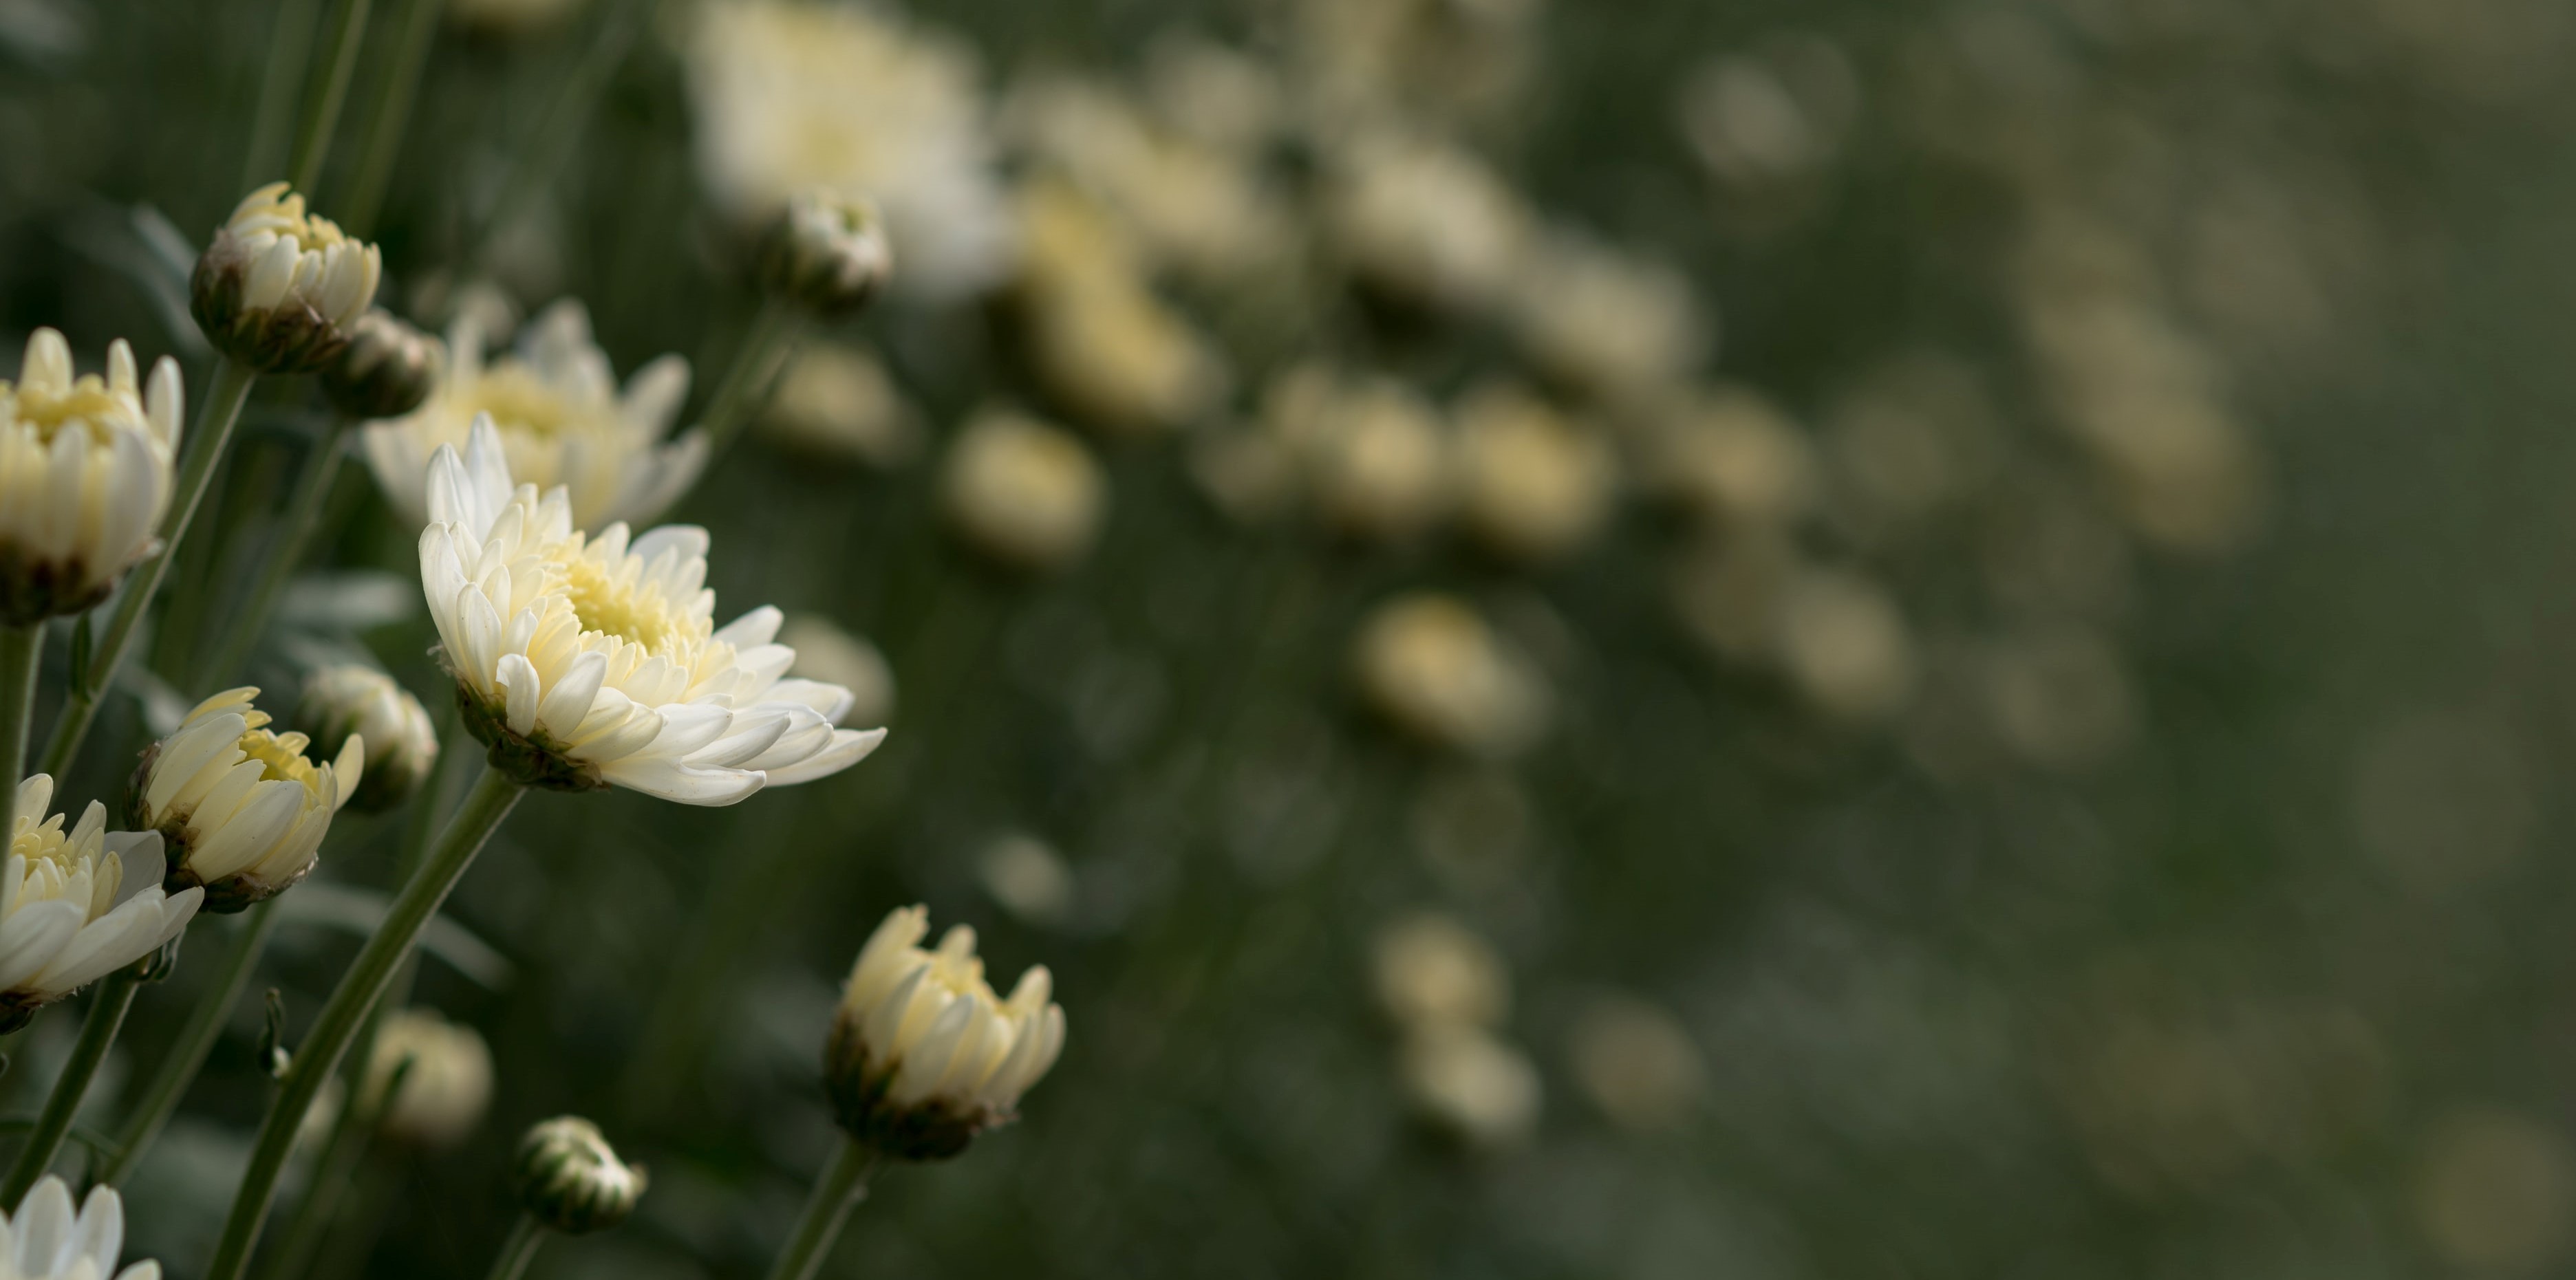 Små hvite blomster hvor de som er nærmest kamera er tydeligere. Foto.